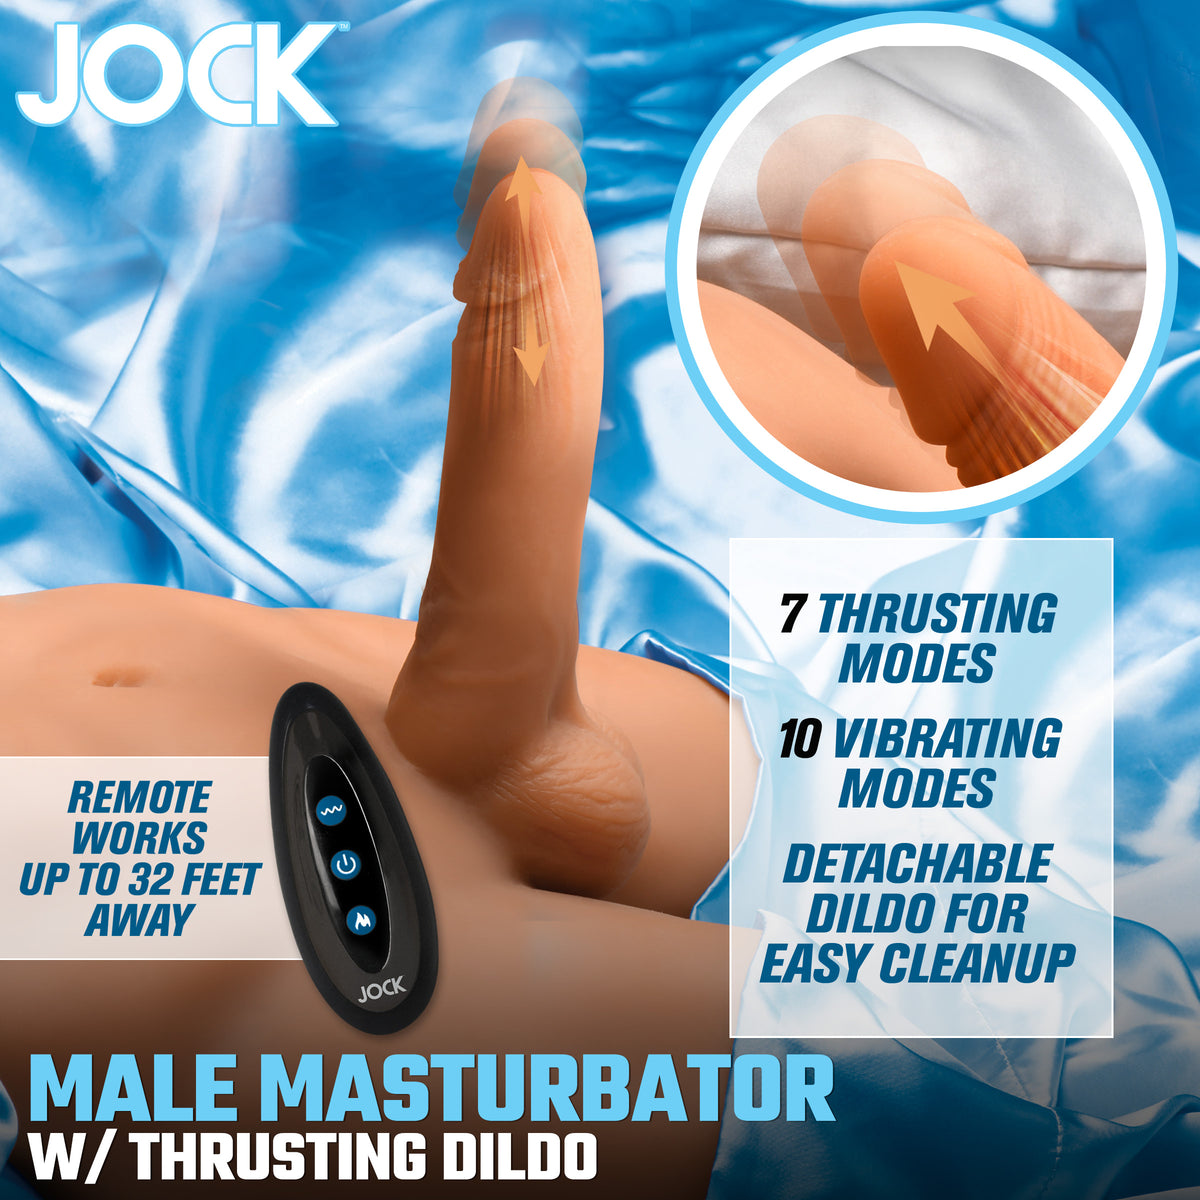 Masturbator w/ Thrusting Dildo